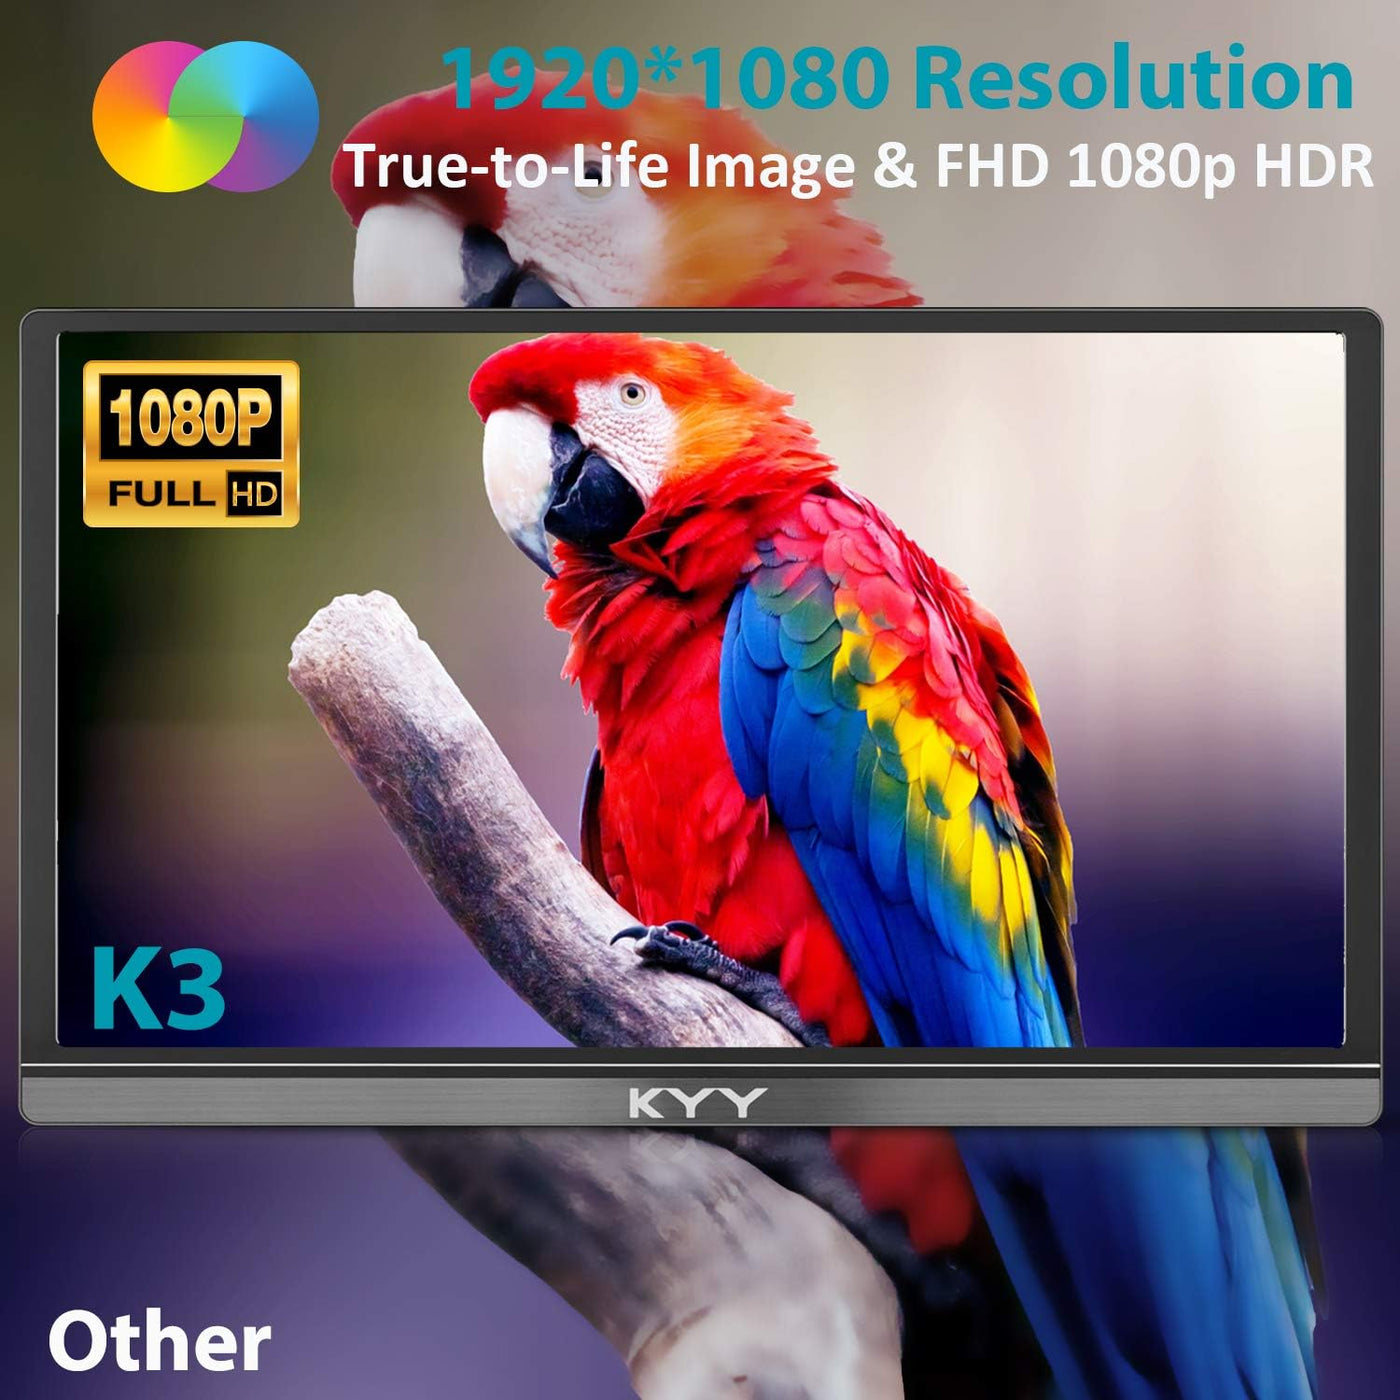 KYY Portable Monitor 15.6inch 1080P FHD USB-C Laptop Monitor - $135